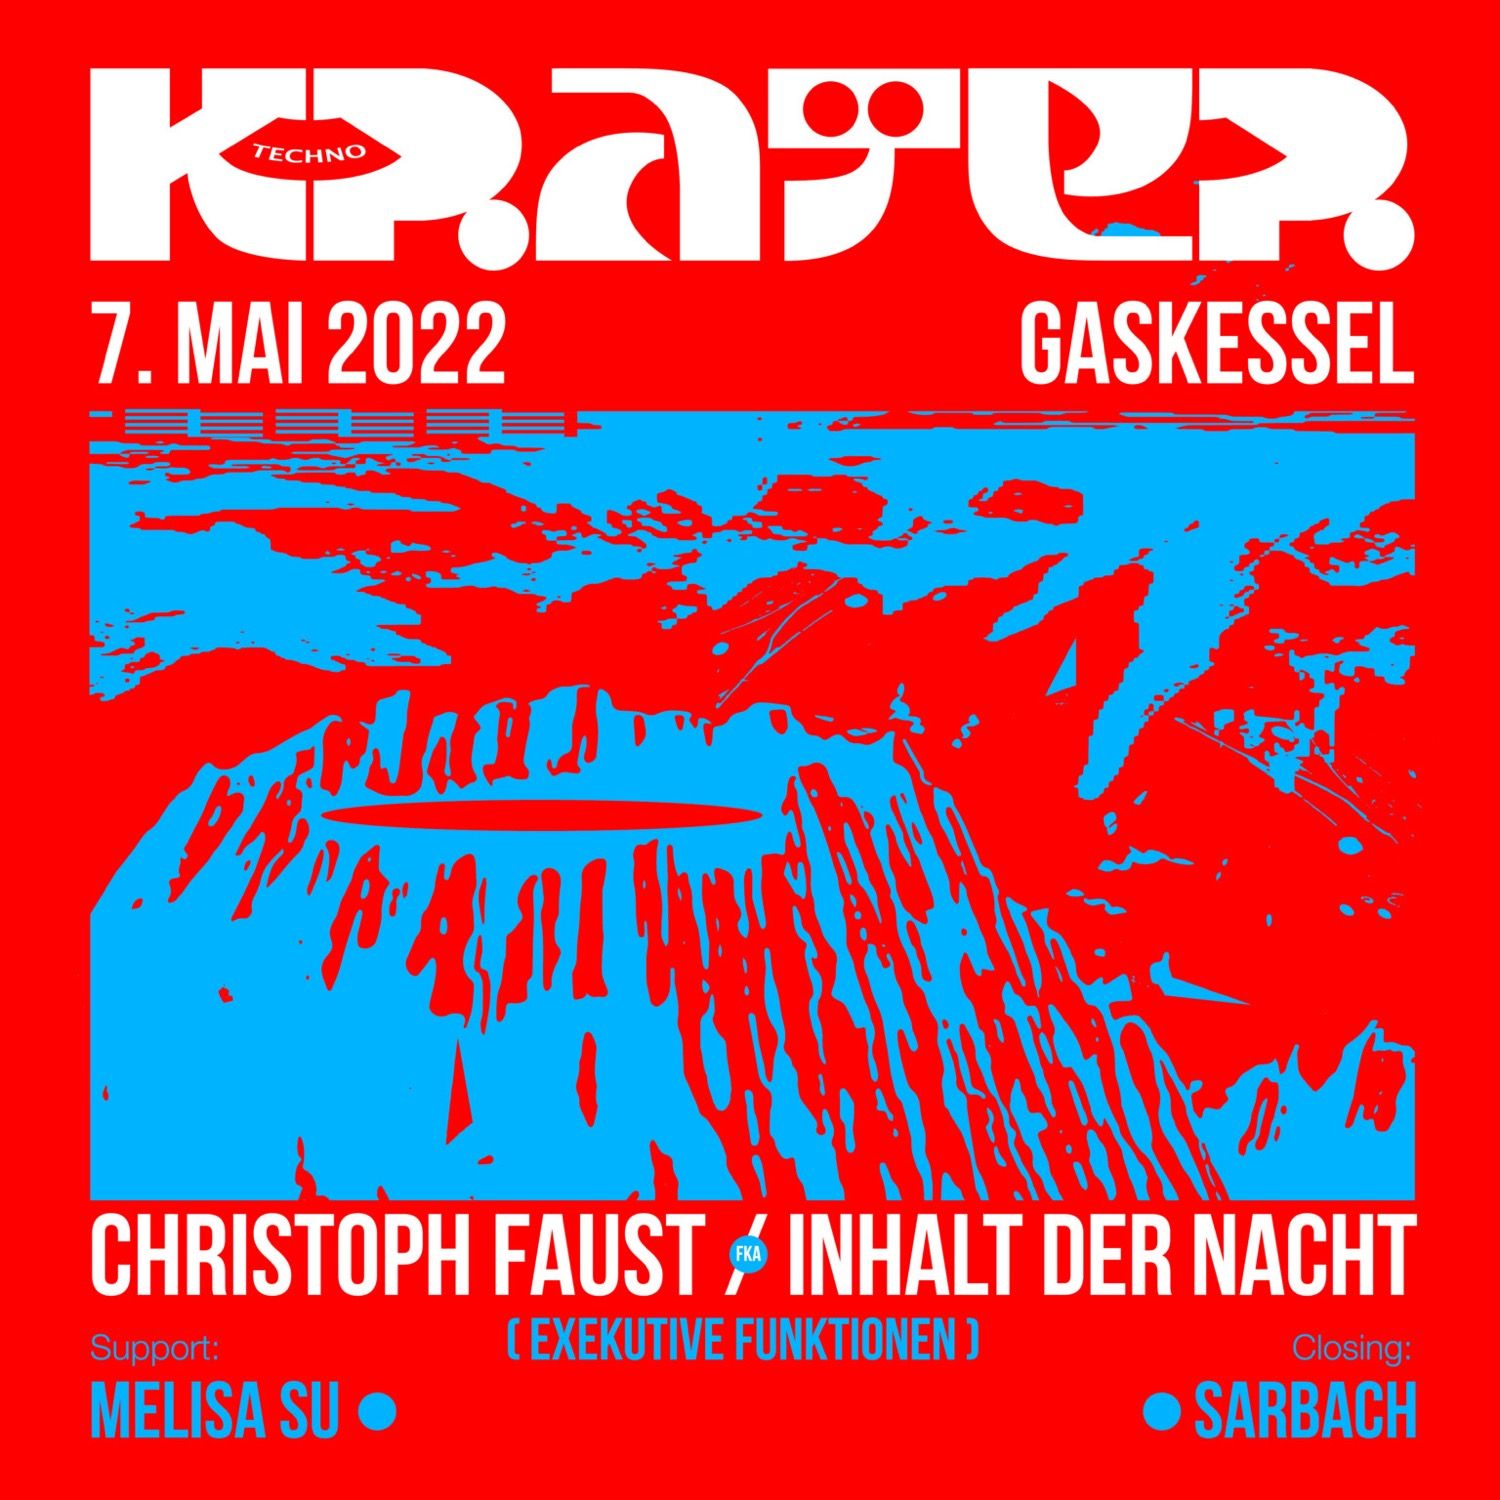 Poster Krater w/ Christoph Faust fka Inhalt der Nacht